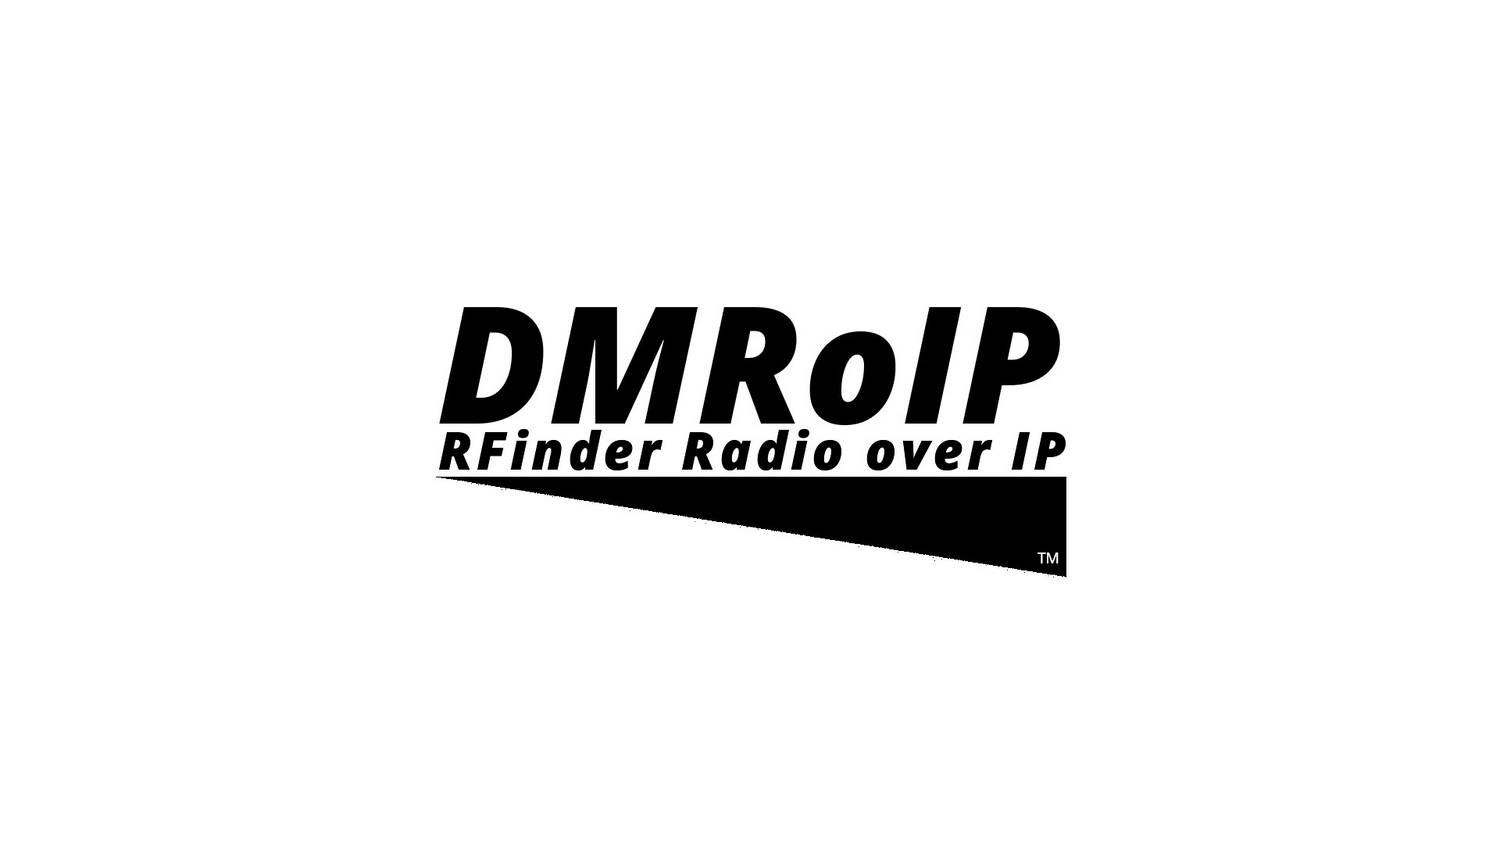 DMRoIP is a registered trademark of RFinder LLC